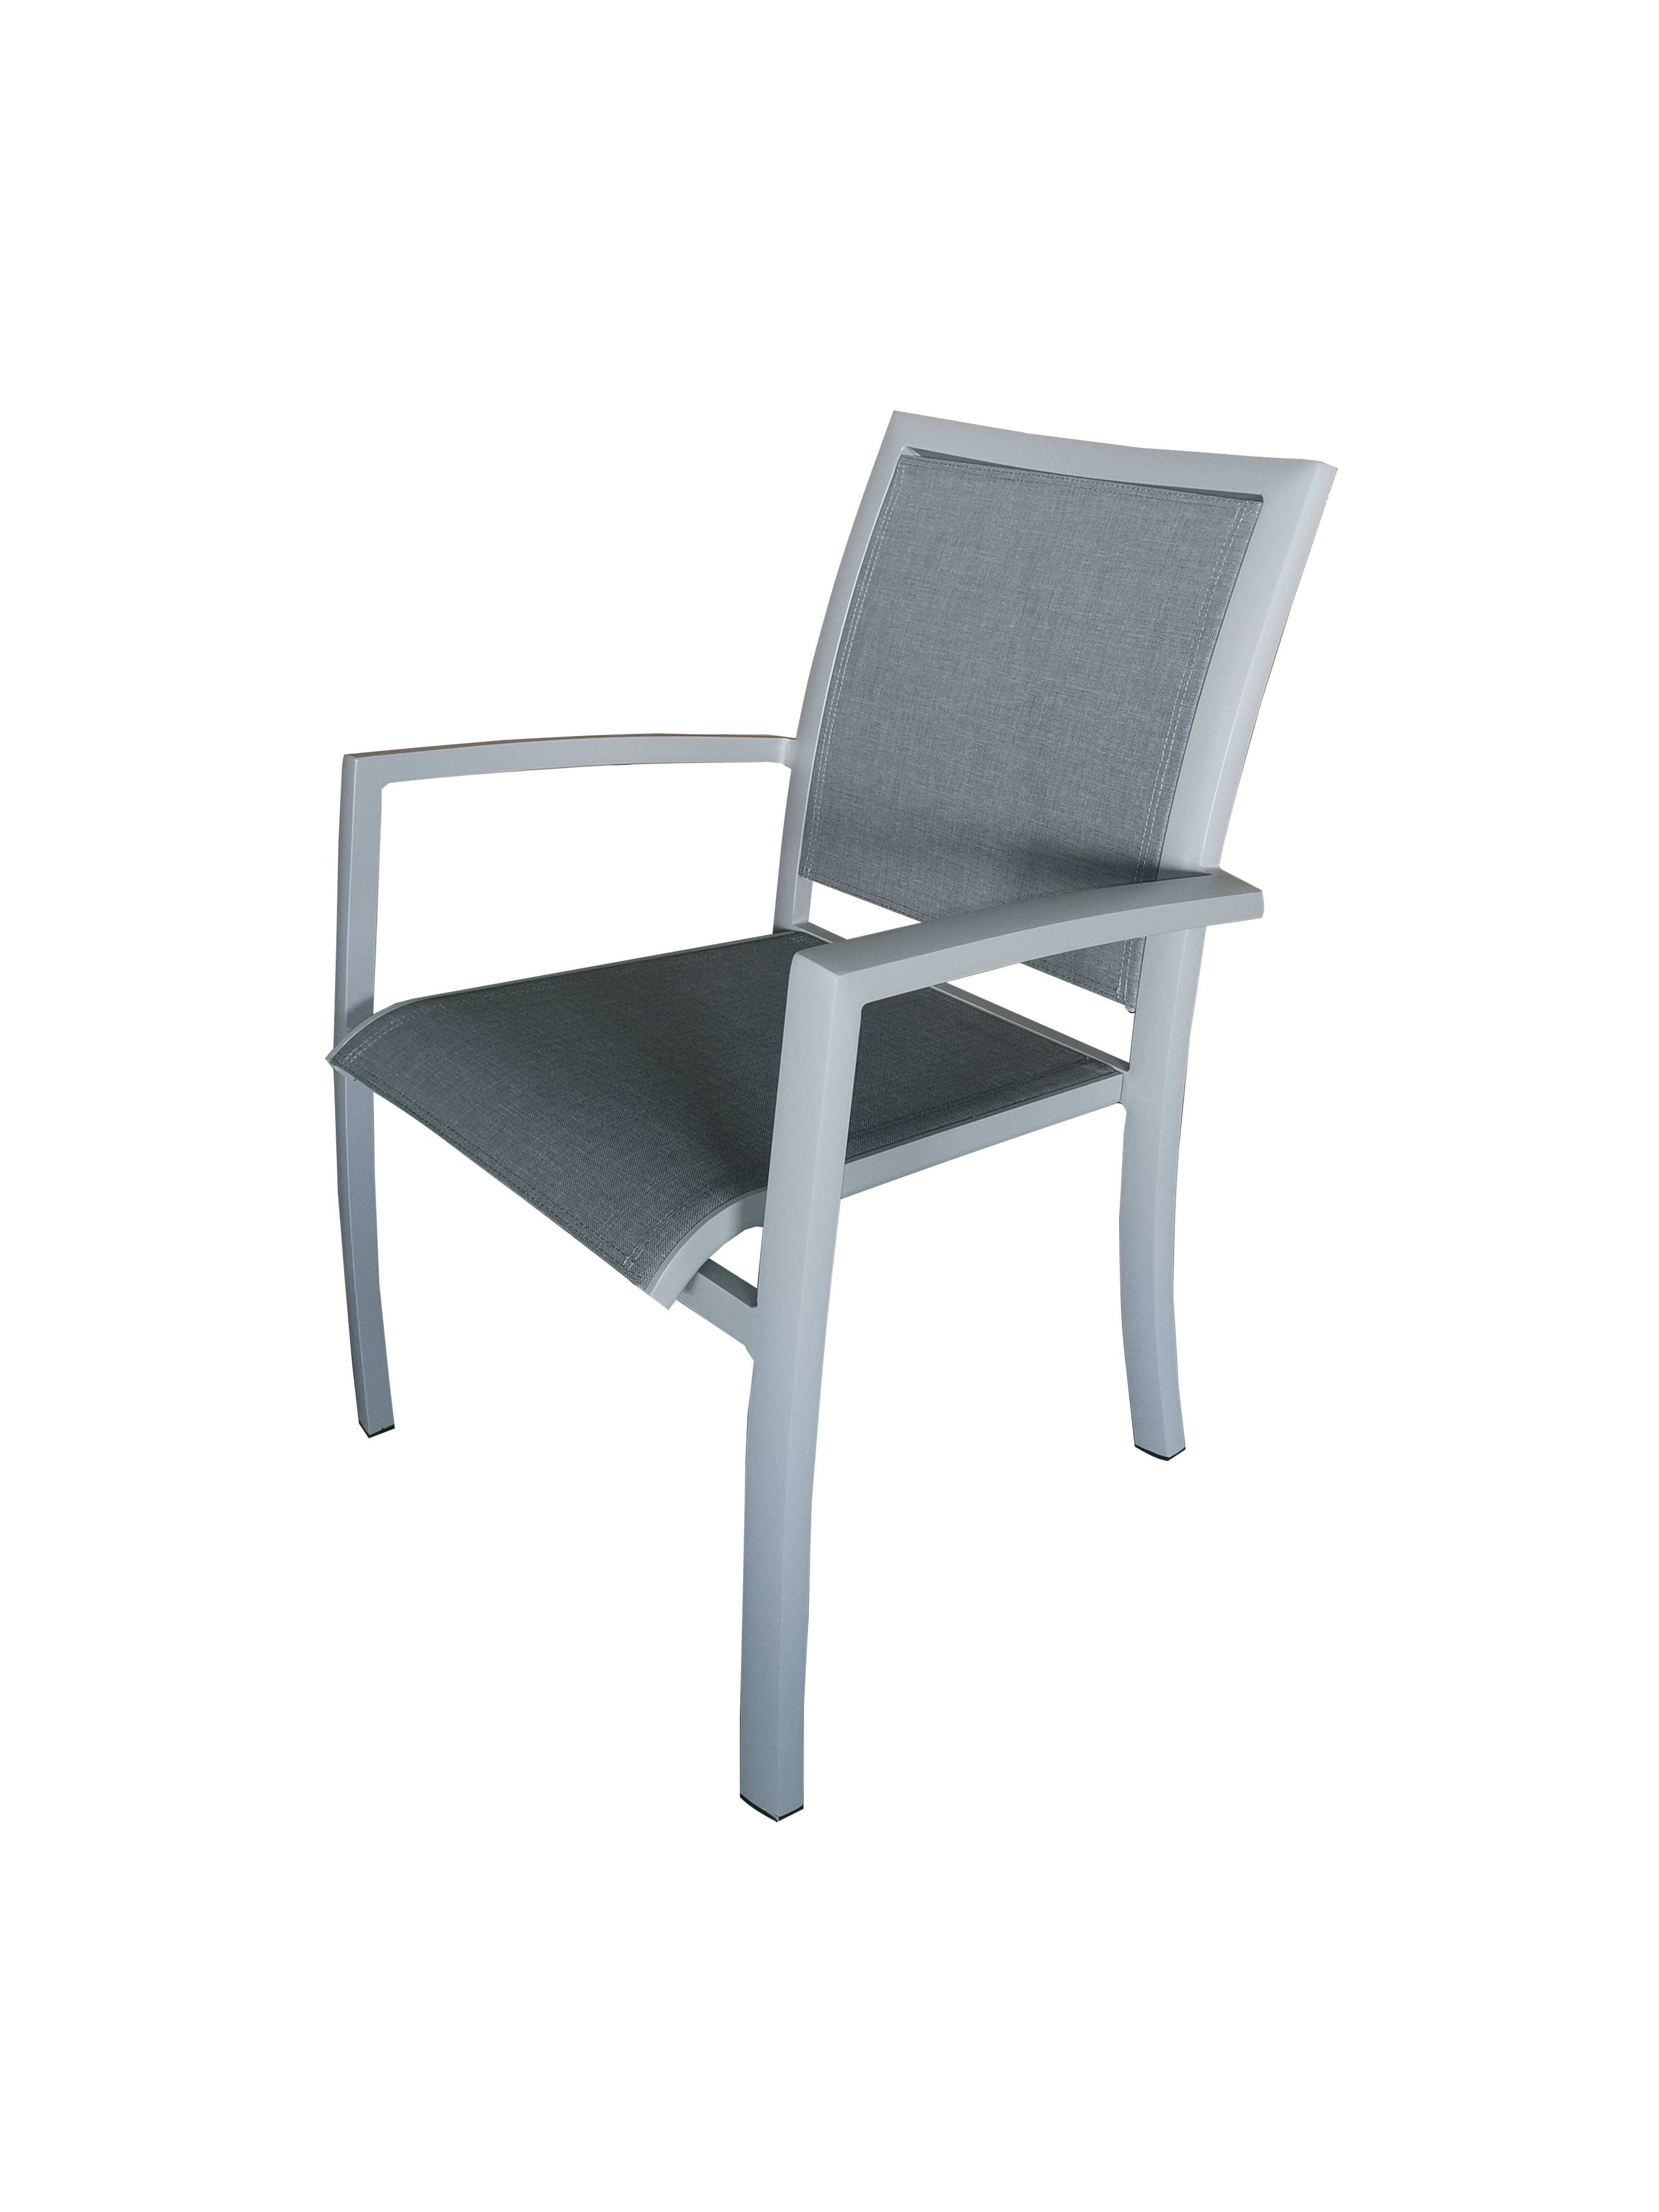 MOSS MOSS-T317GPM - Akumal Collection, Light grey matte aluminum stackable chair with grey mix textilene seat 24" x 31" x H 36"